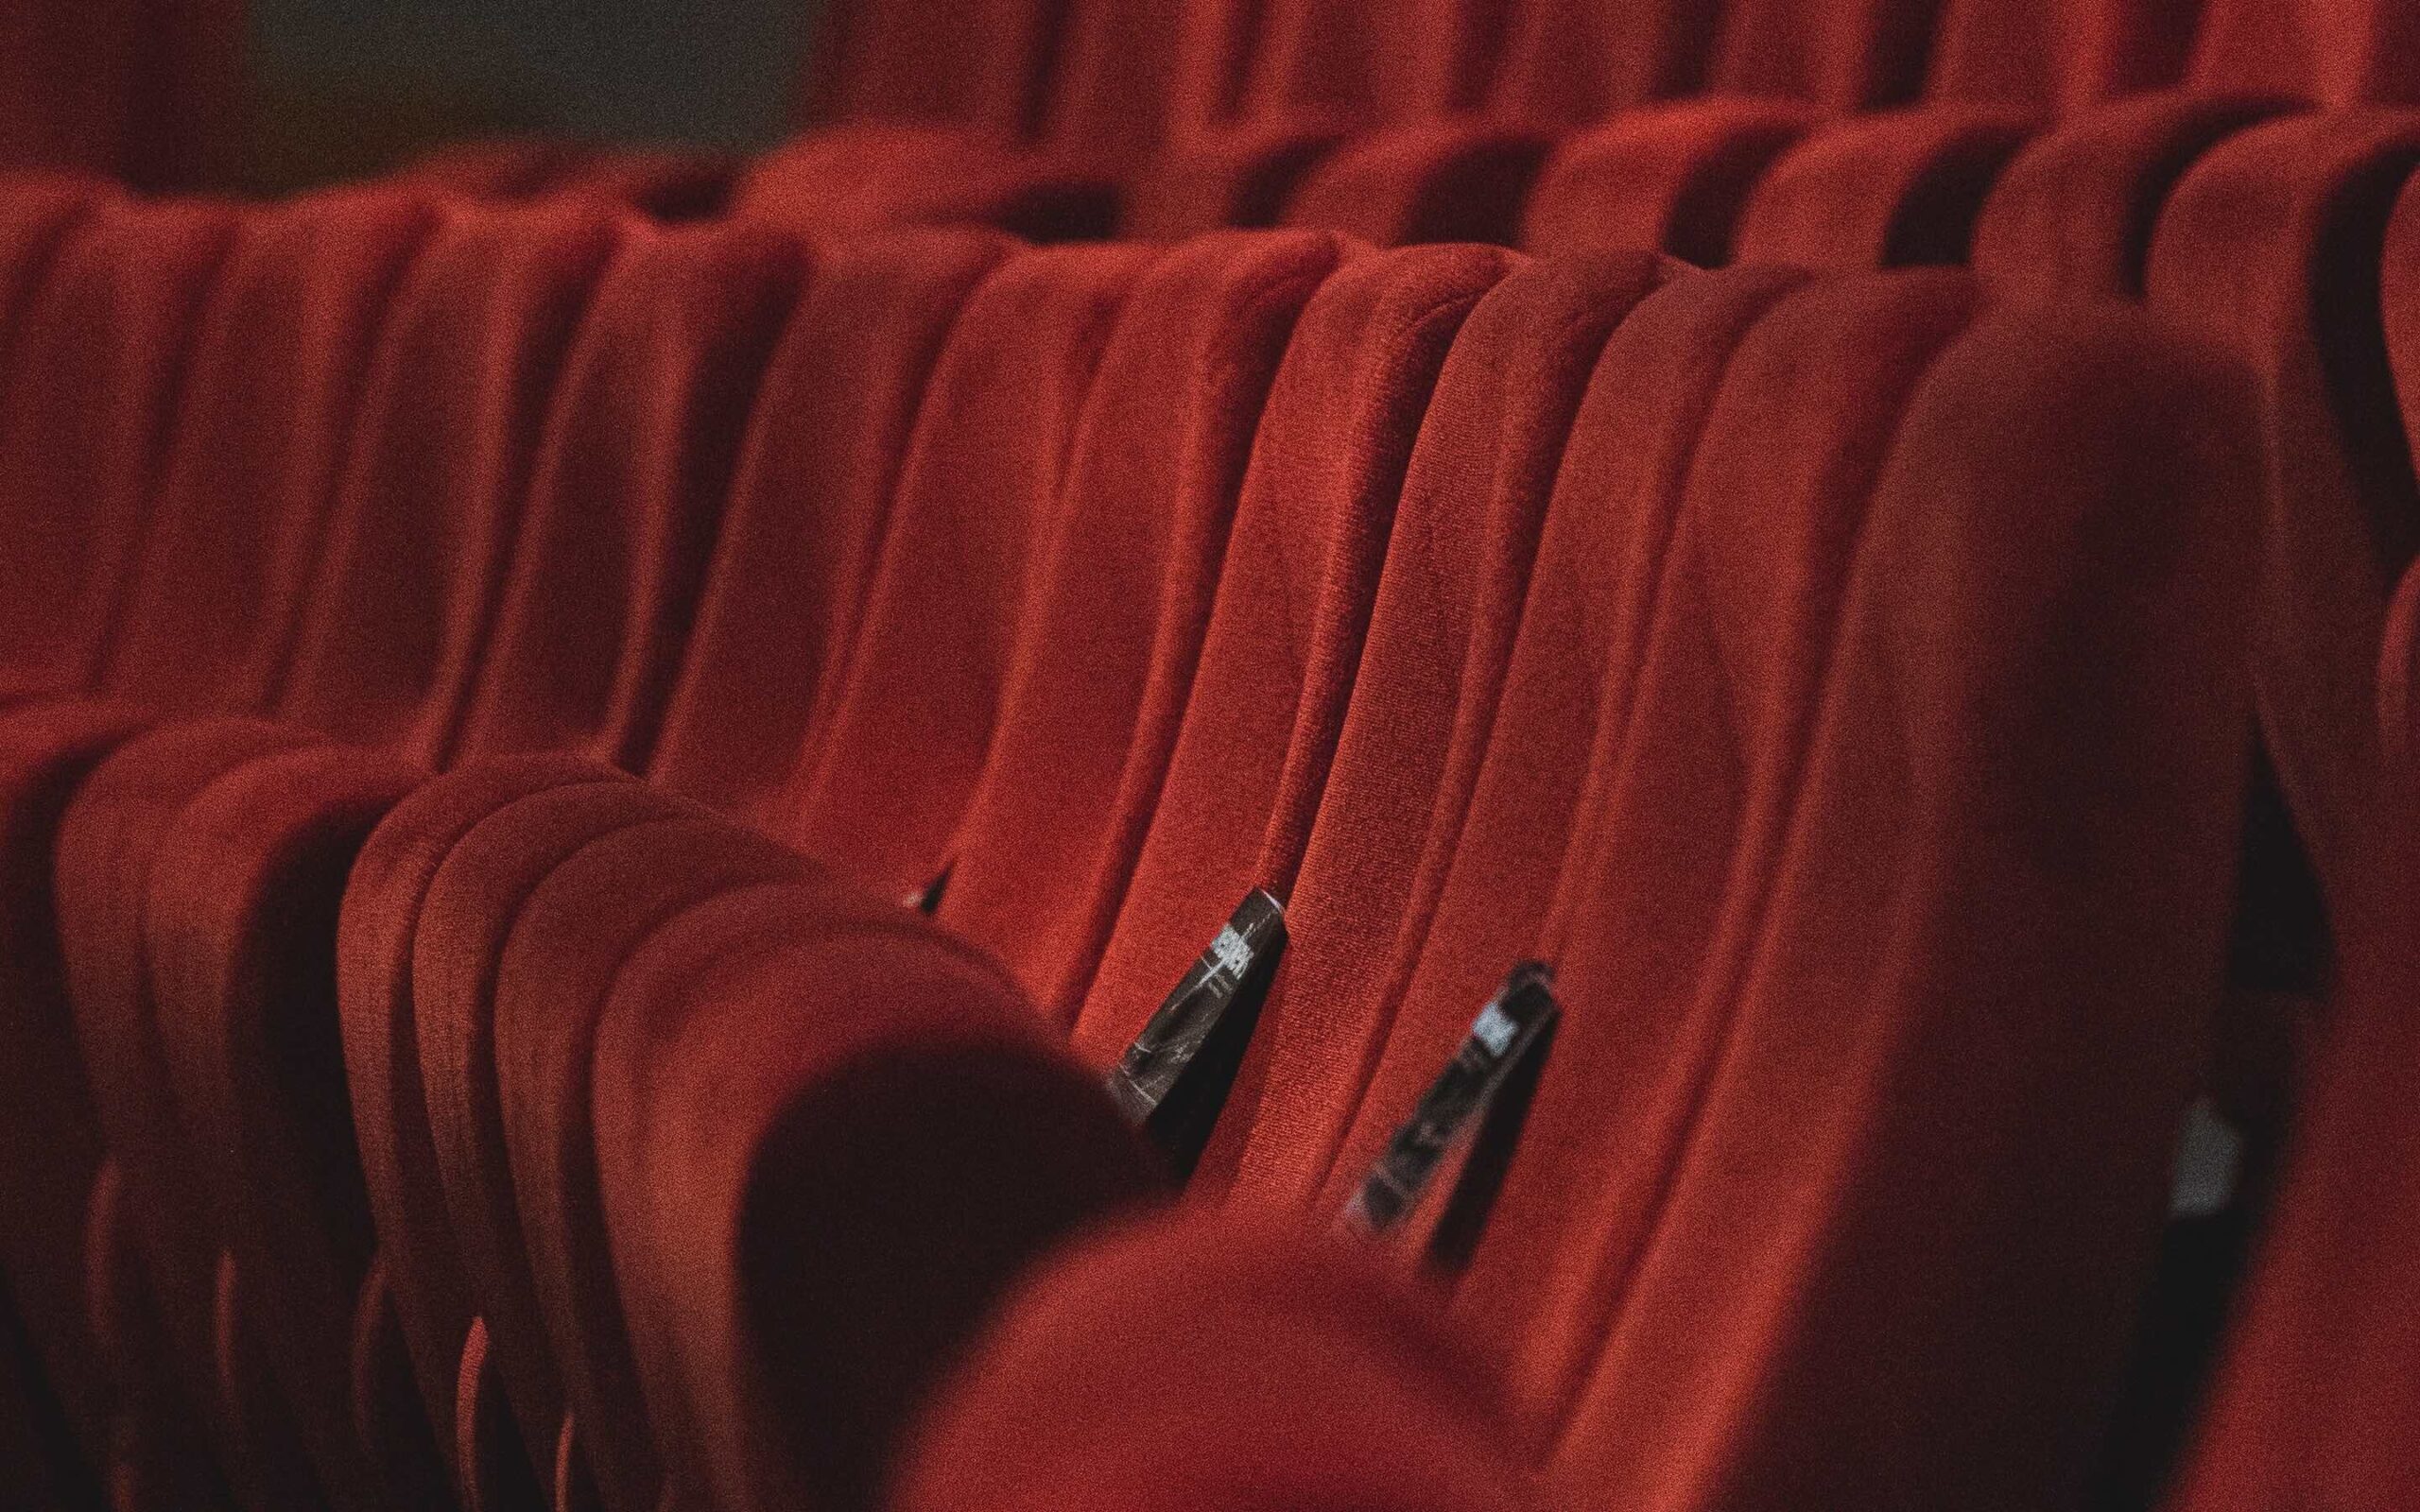 A bank of cinema seats